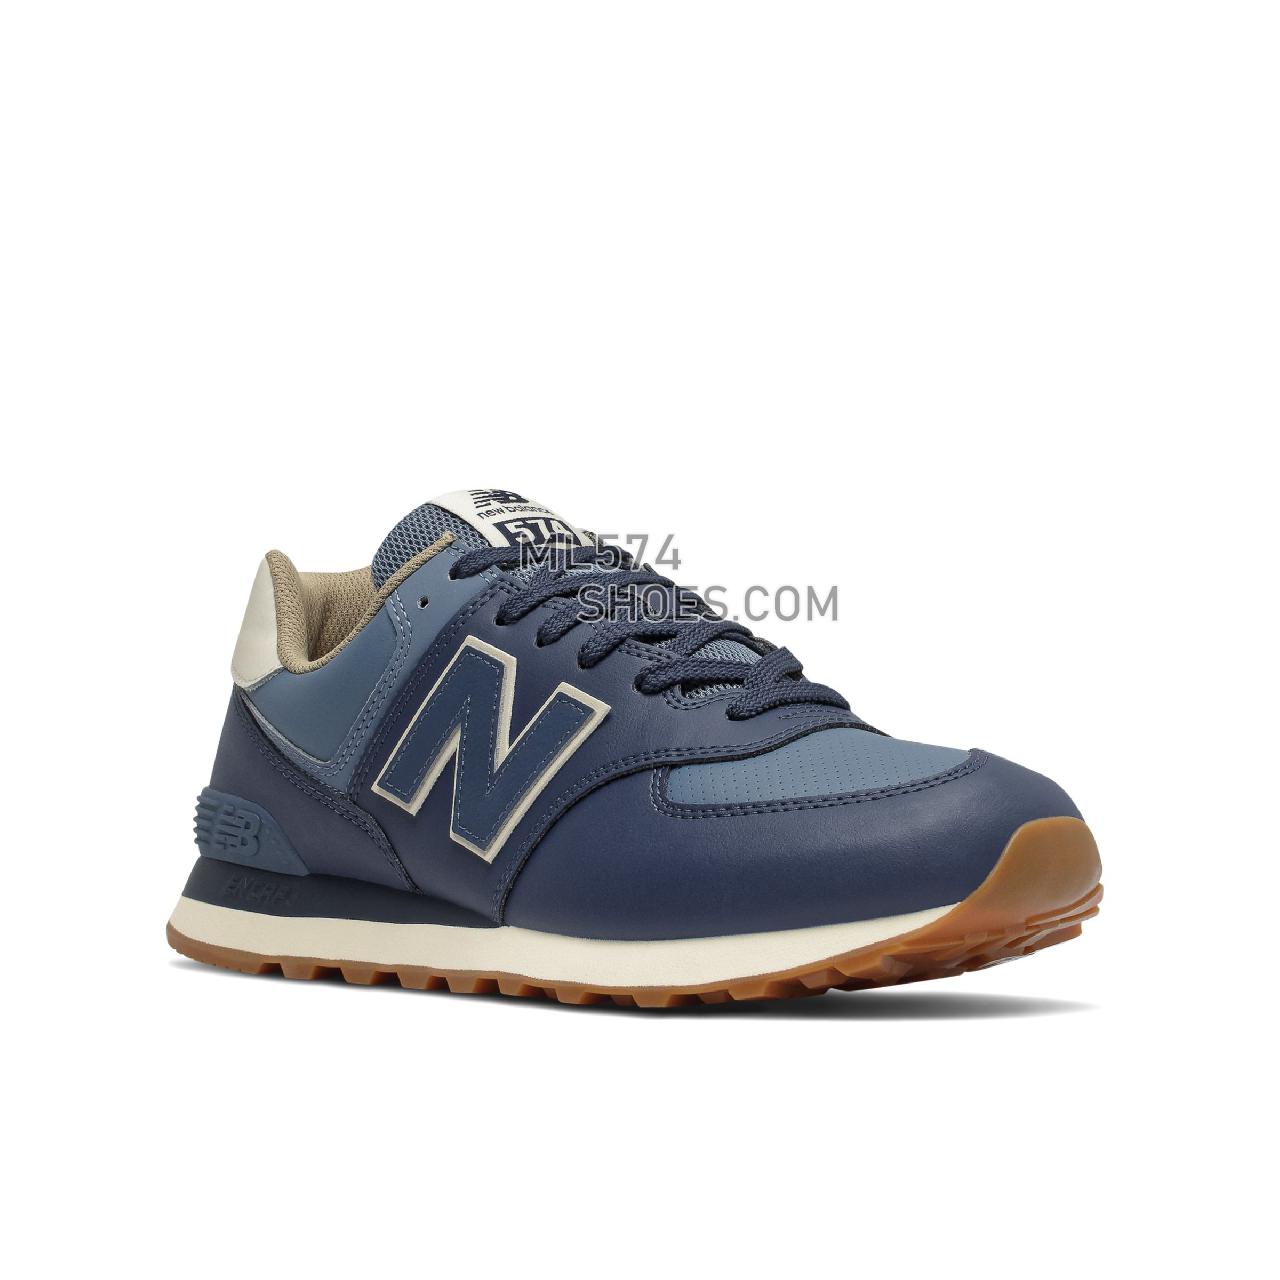 New Balance 574 - Unisex Men's Women's Classic Sneakers - Natural Indigo with Deep Porcelain Blue - U574VS2